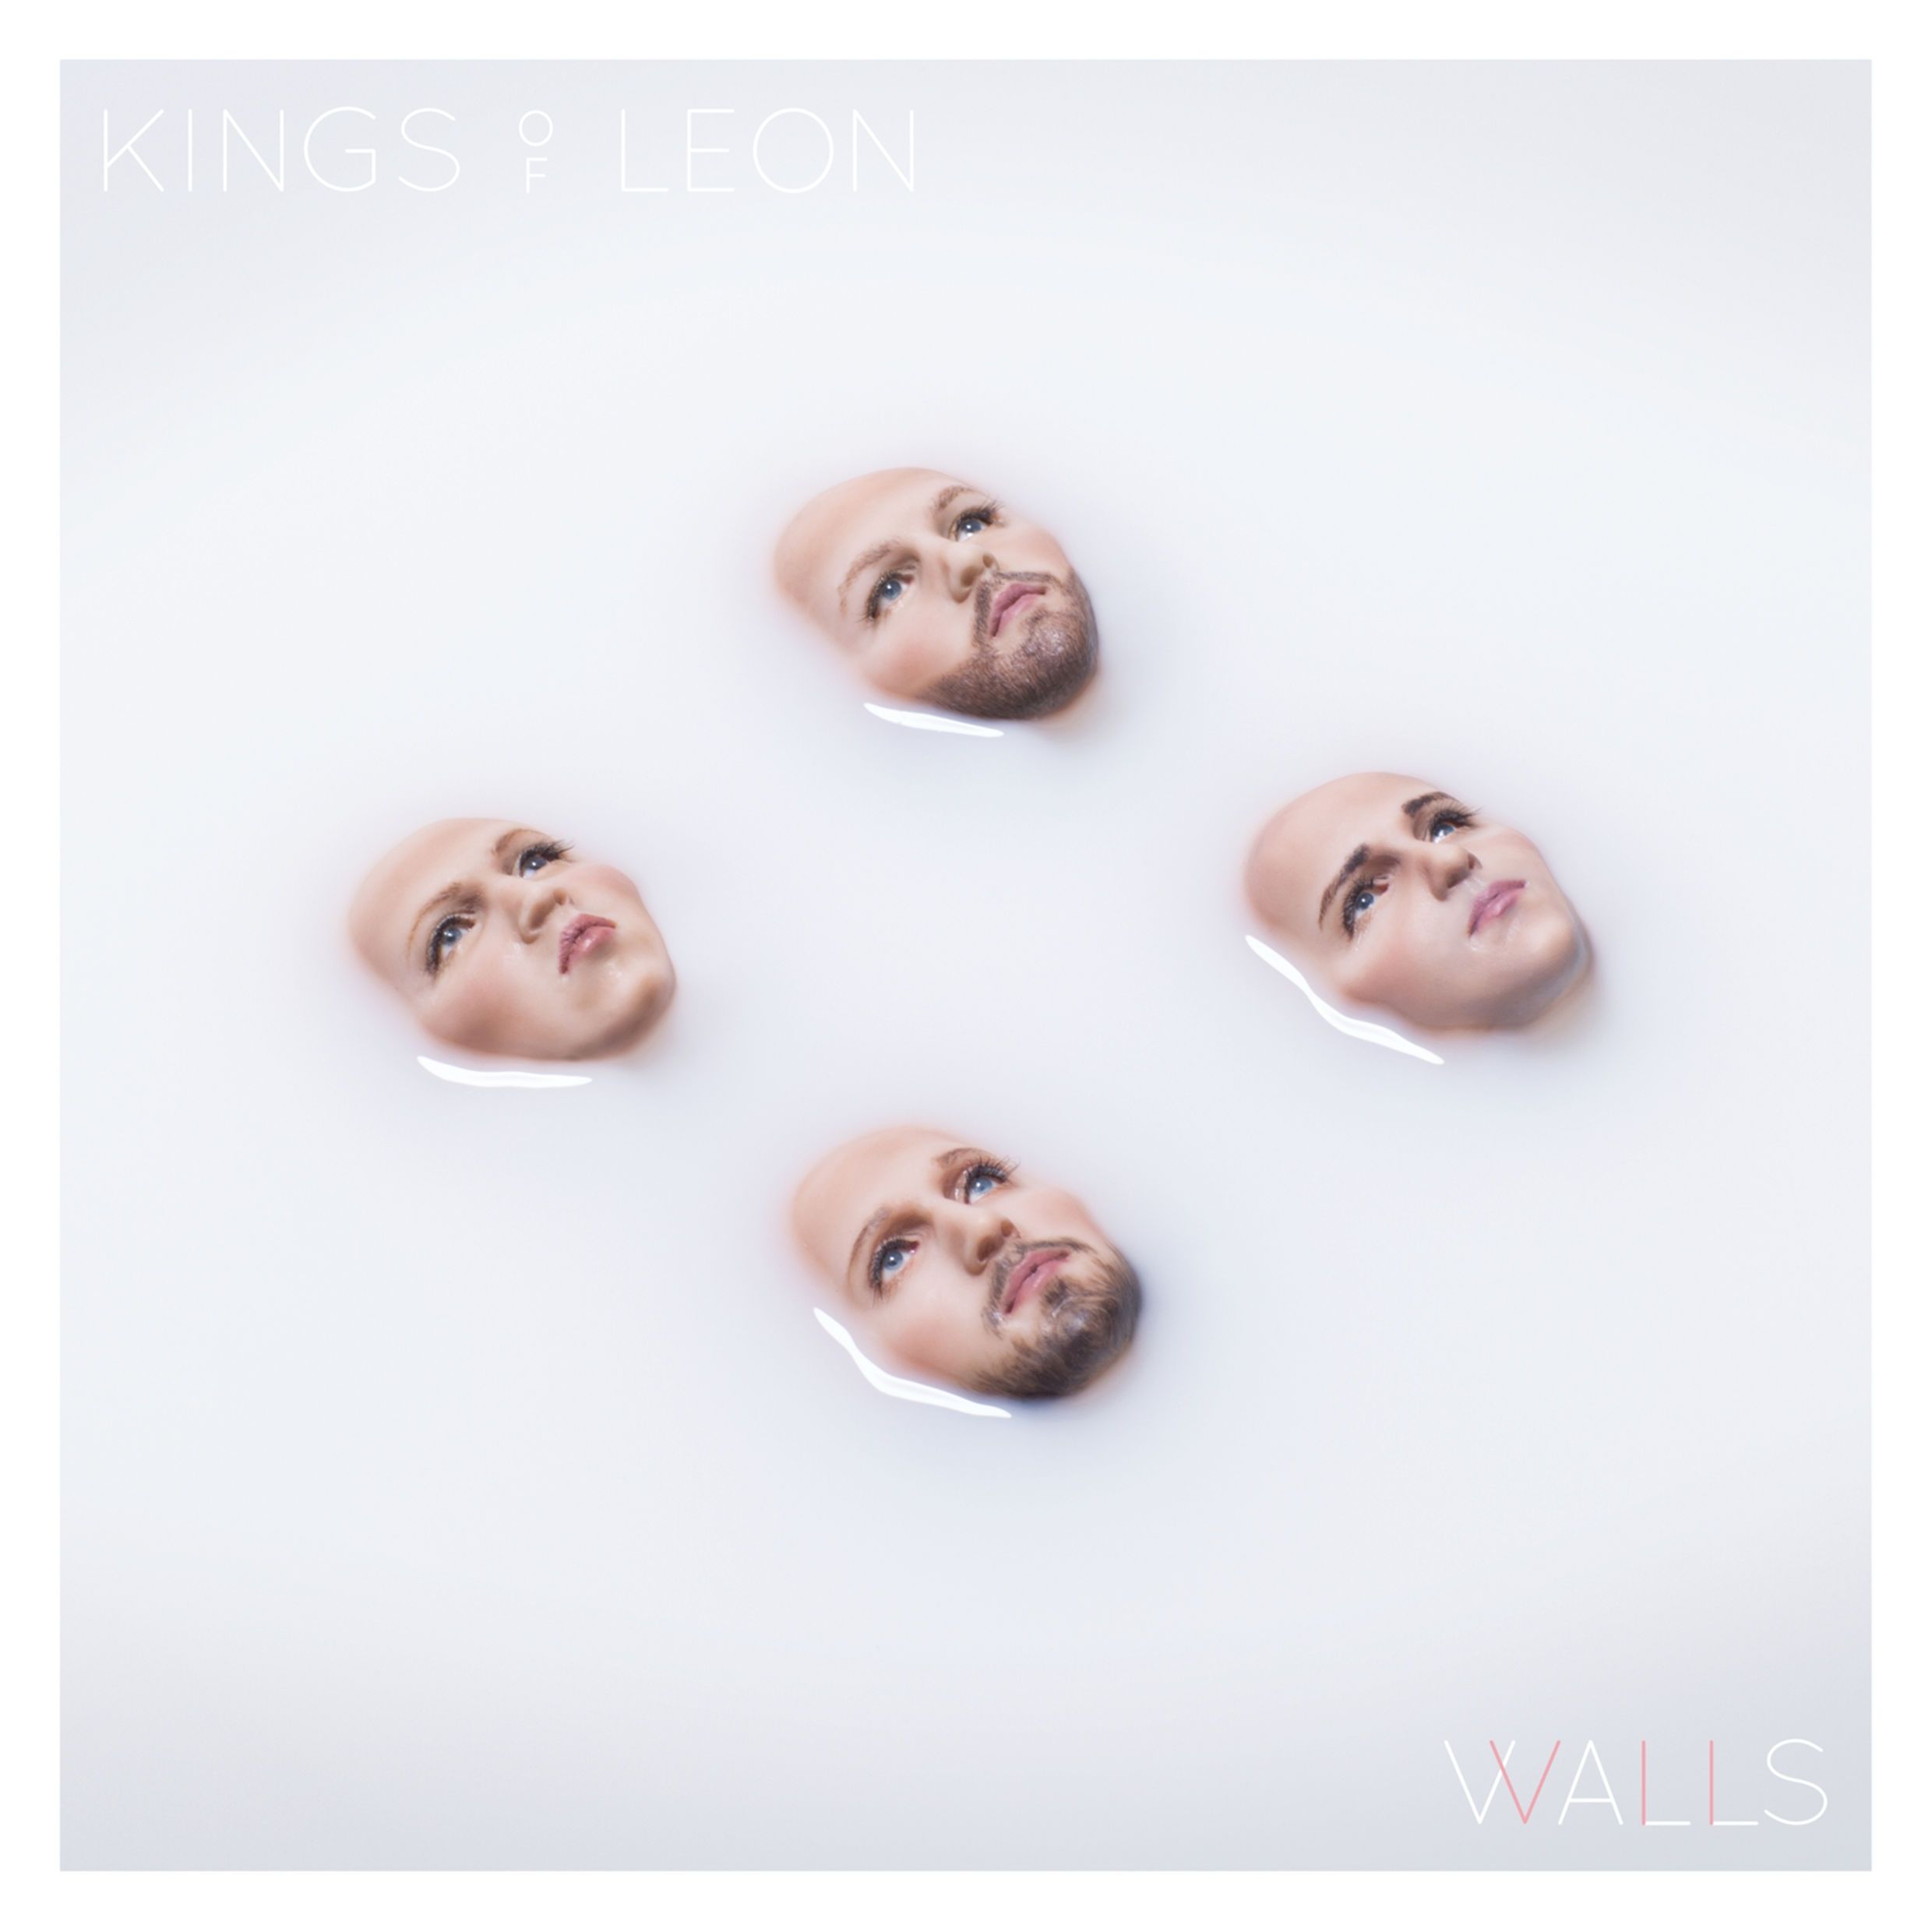 Imagem do álbum Walls do(a) artista Kings Of Leon